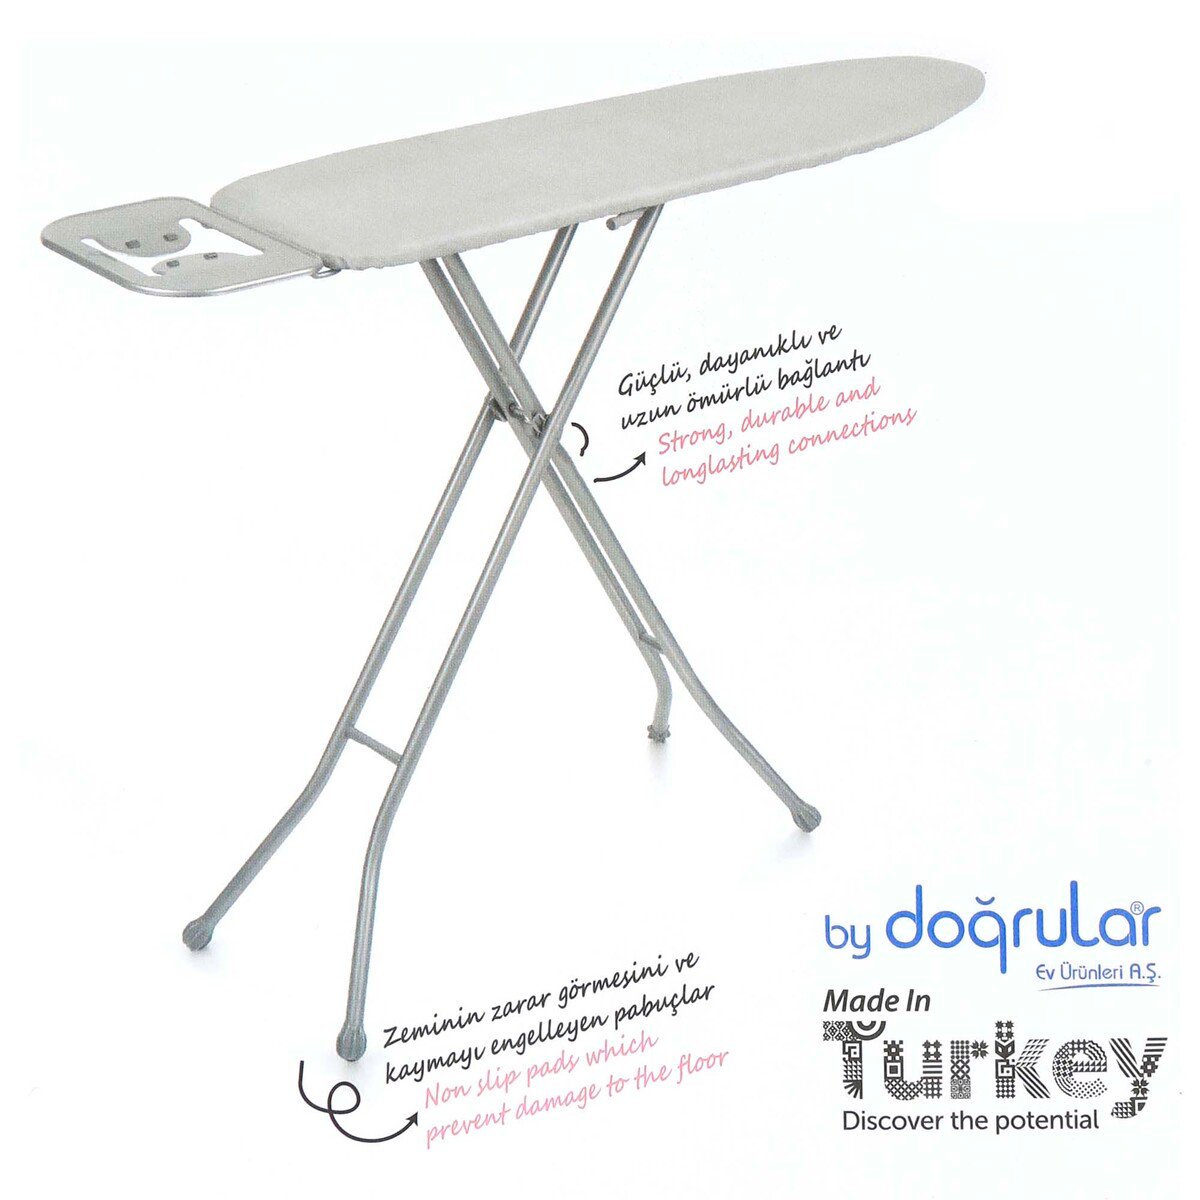 Dogrular Ironing Board 15020 30x105cm